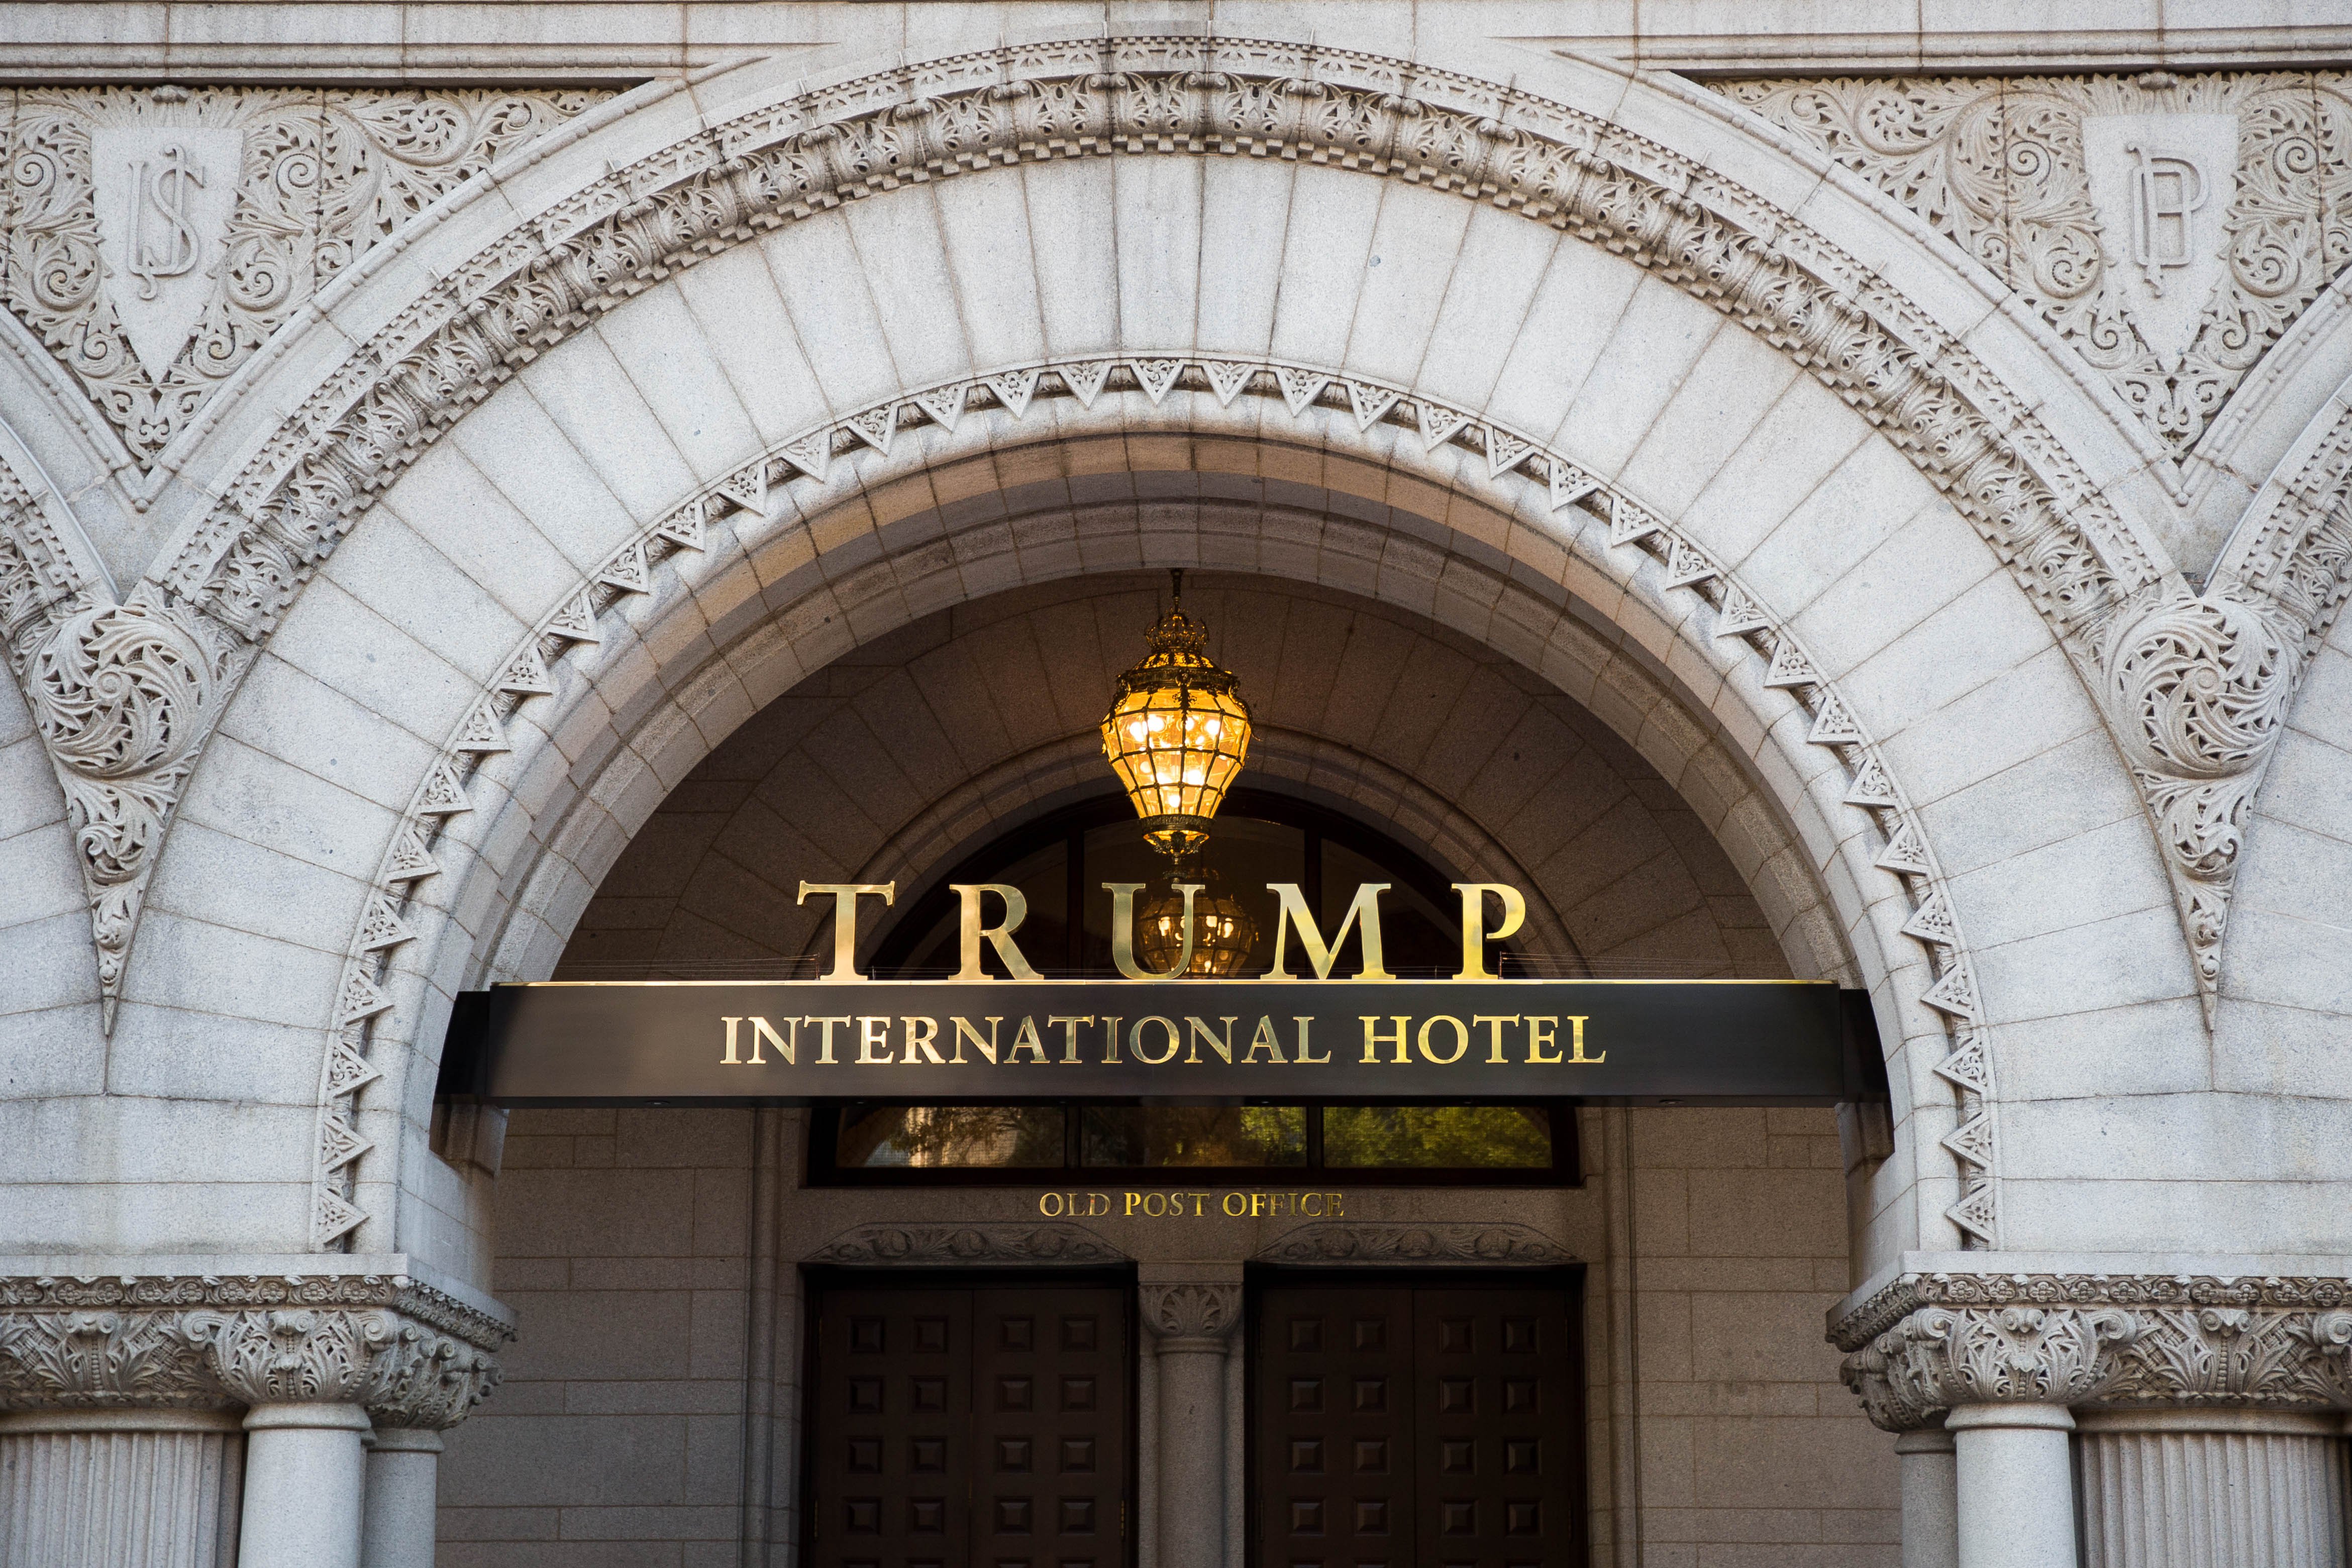 The Trump International Hotel entrance